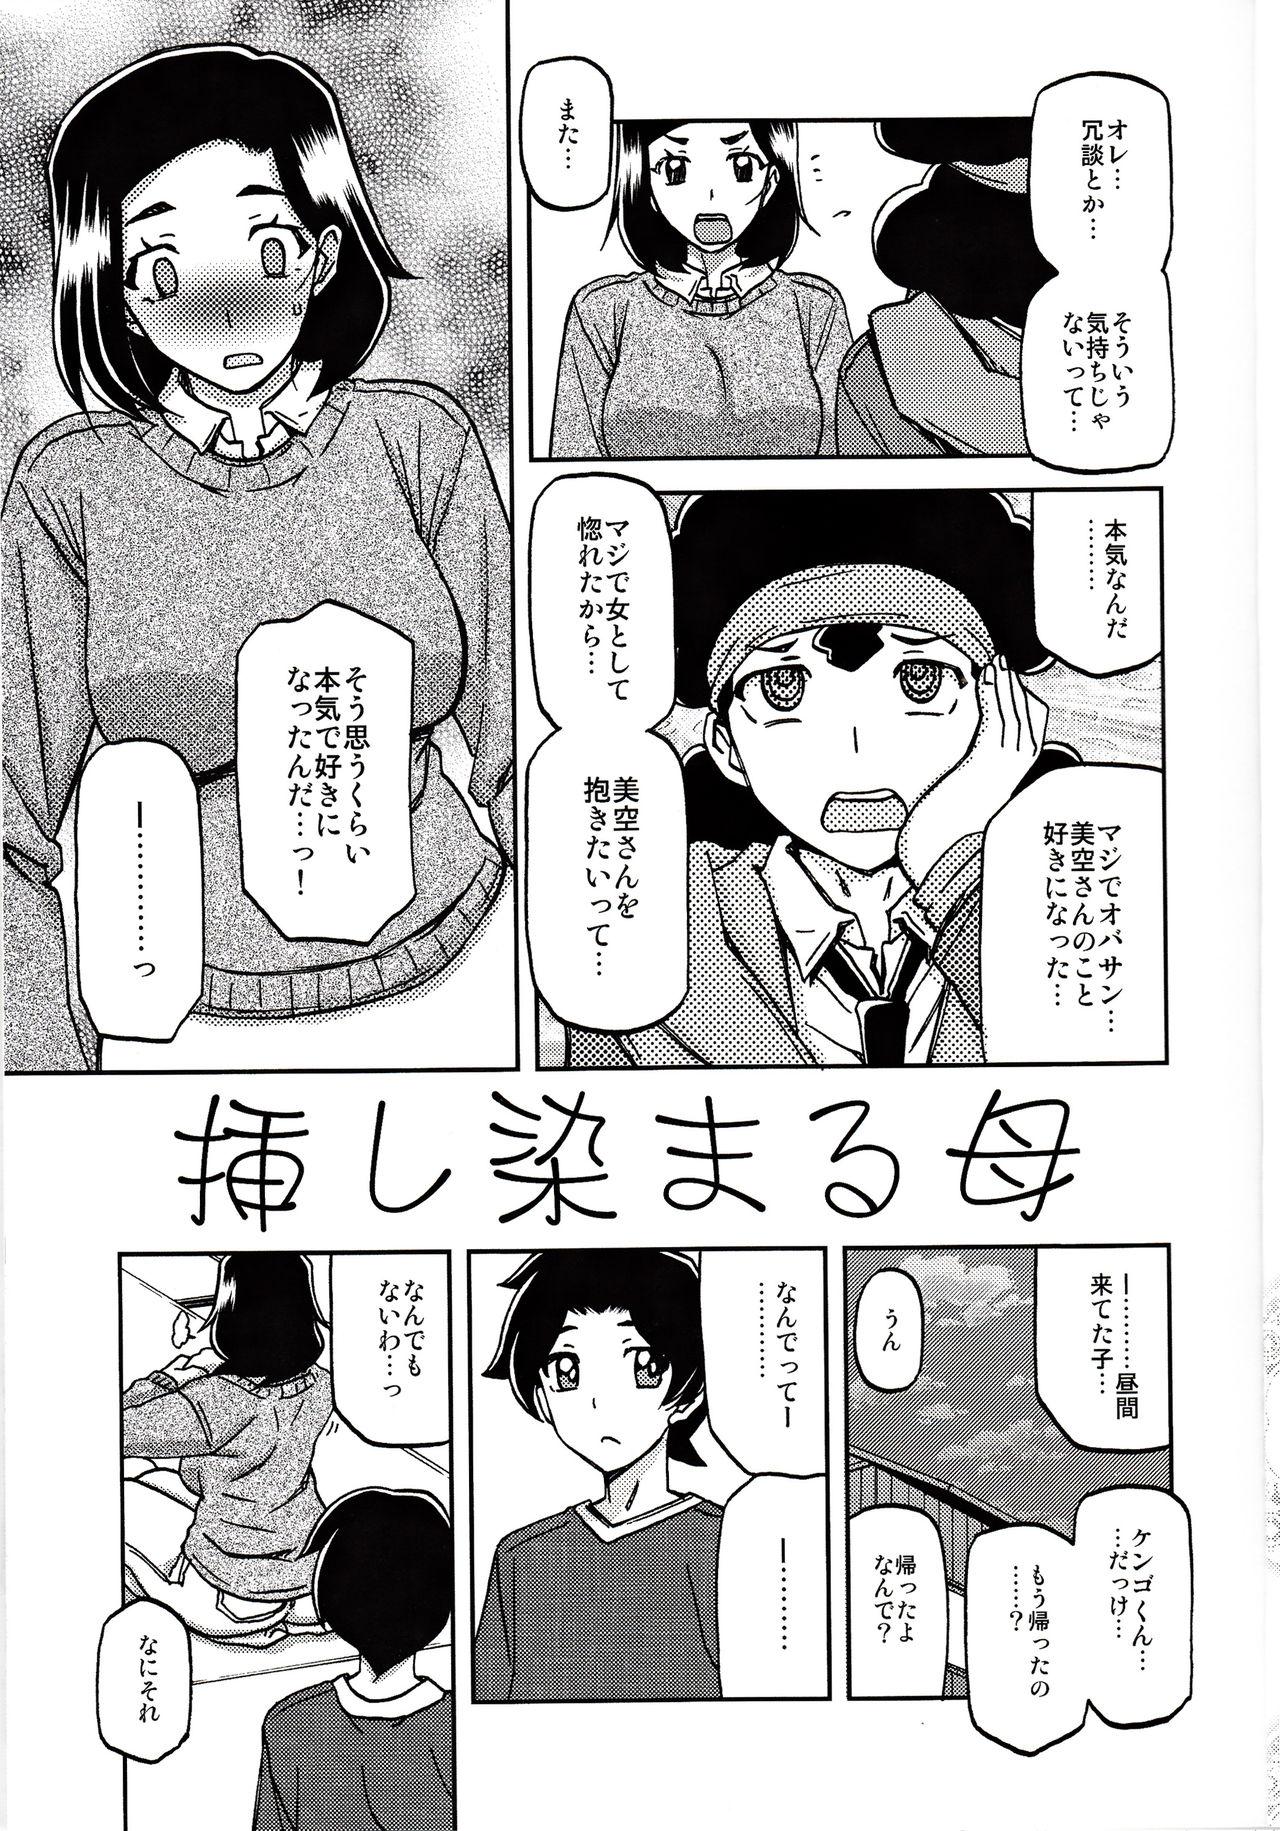 Girlfriends Akebi no Mi - Misora Katei - Akebi no mi Old And Young - Page 4